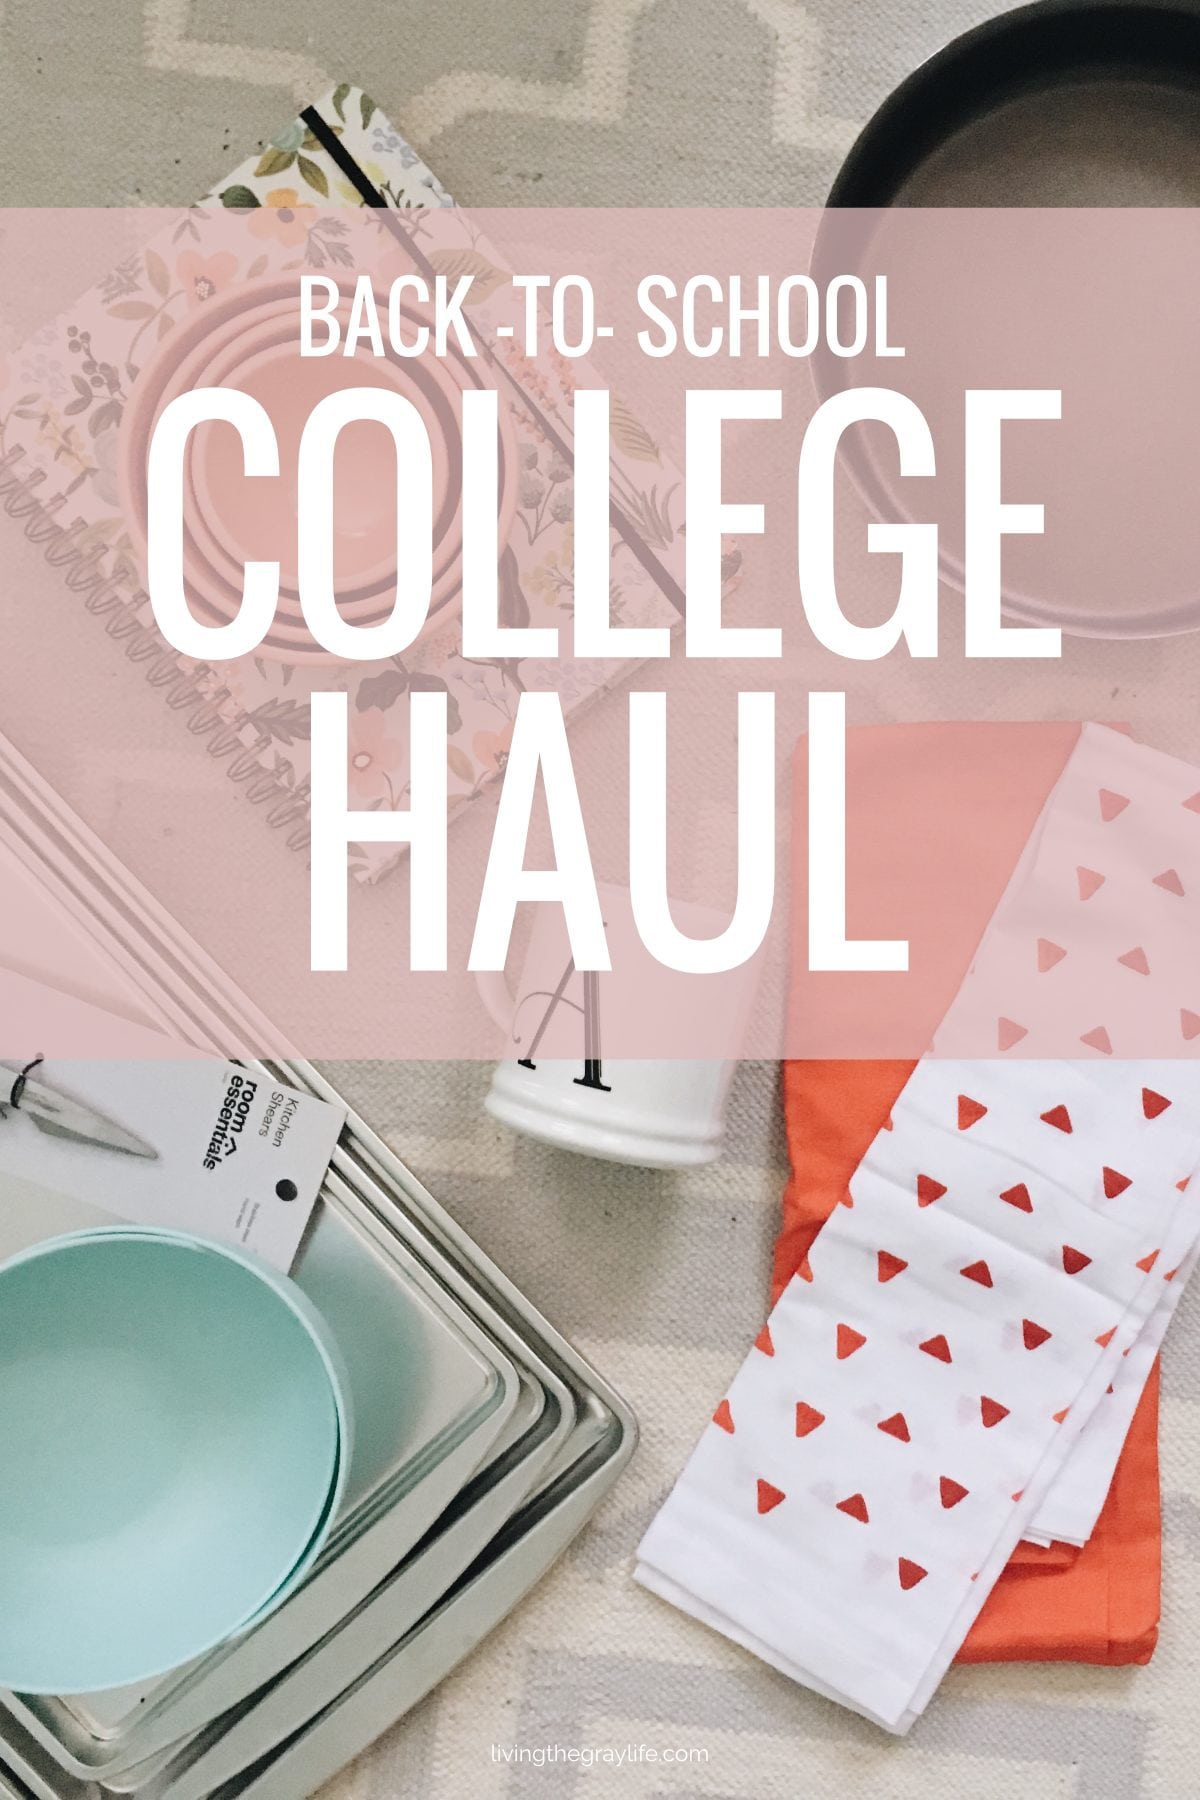 Back-to-school College Haul | College dorm room essentials